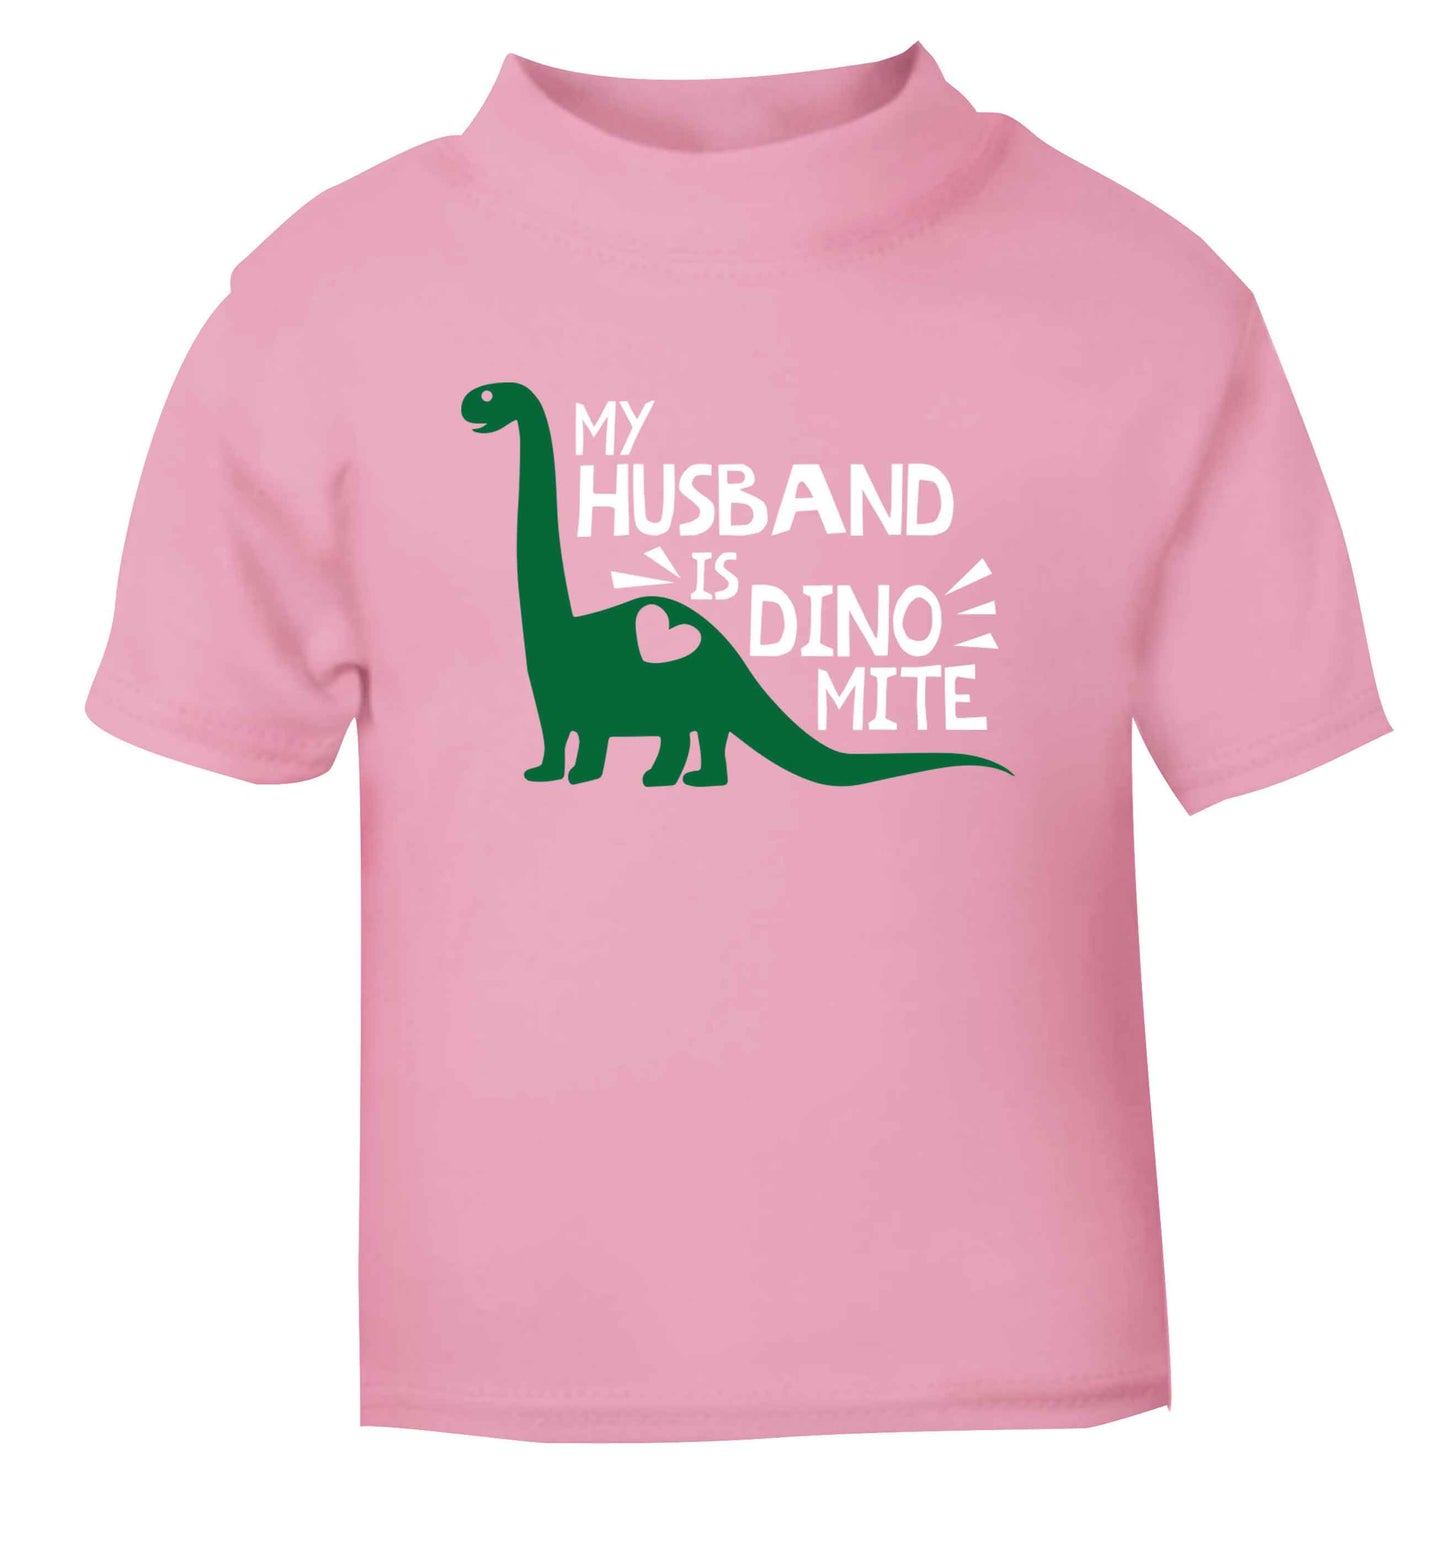 My husband is dinomite! light pink Baby Toddler Tshirt 2 Years